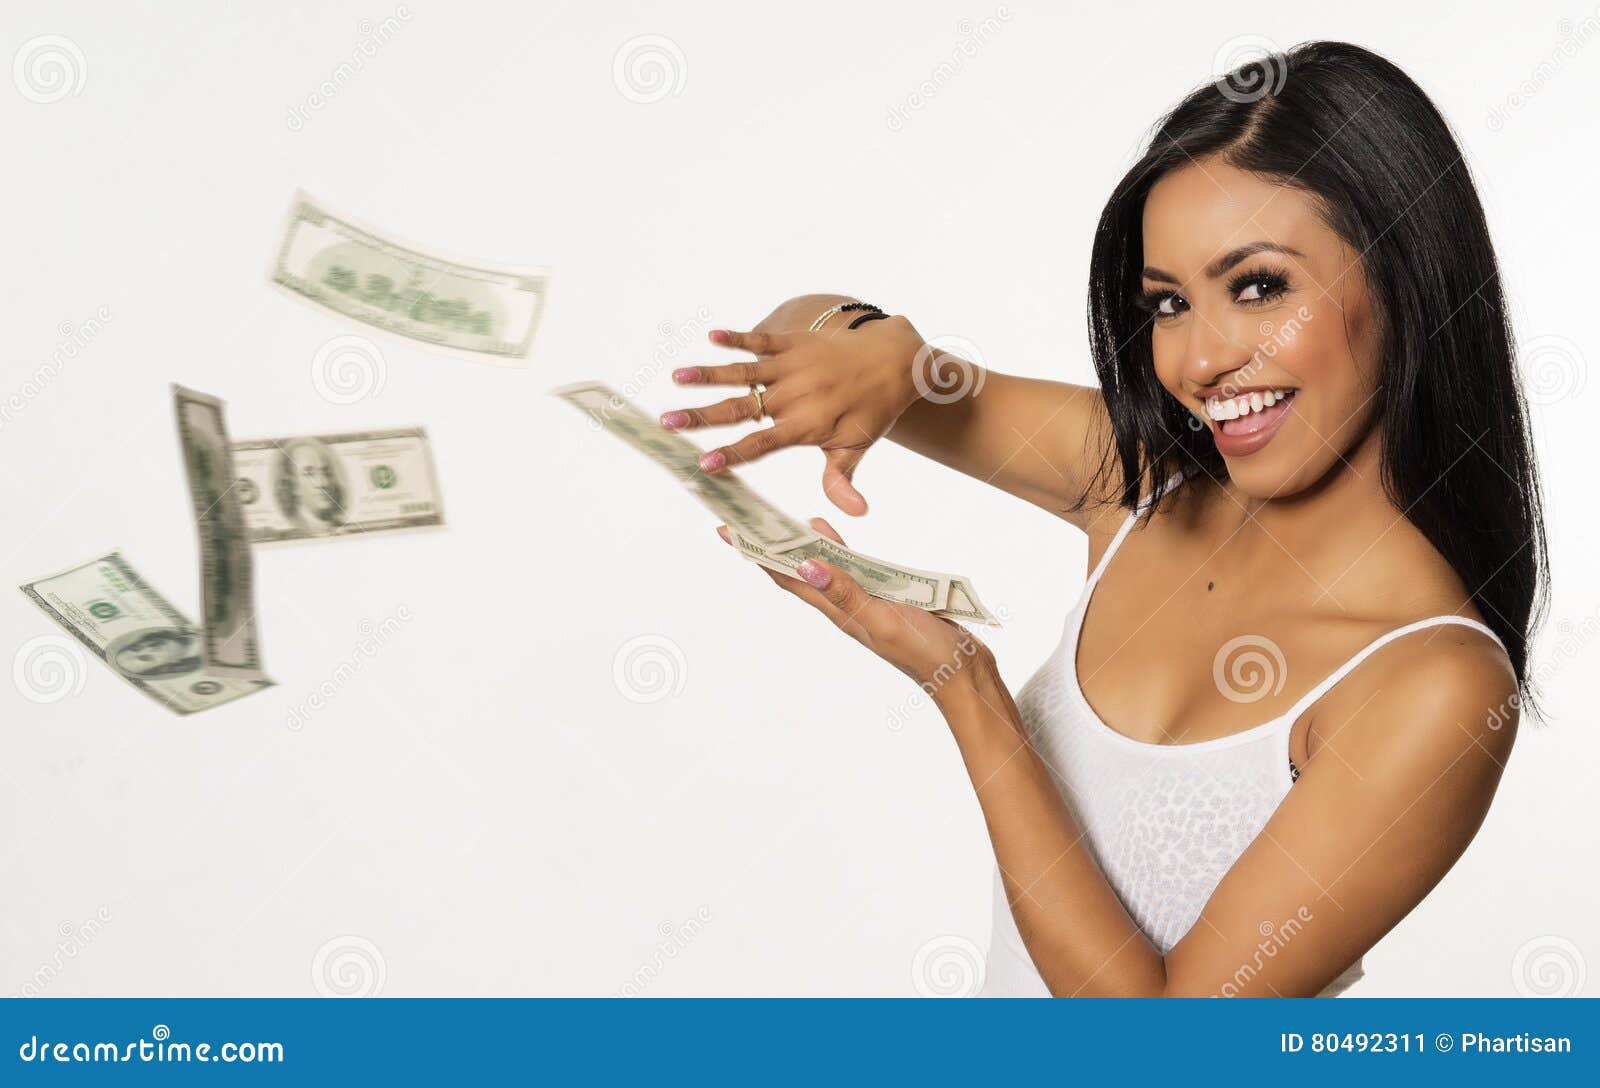 woman throwing money